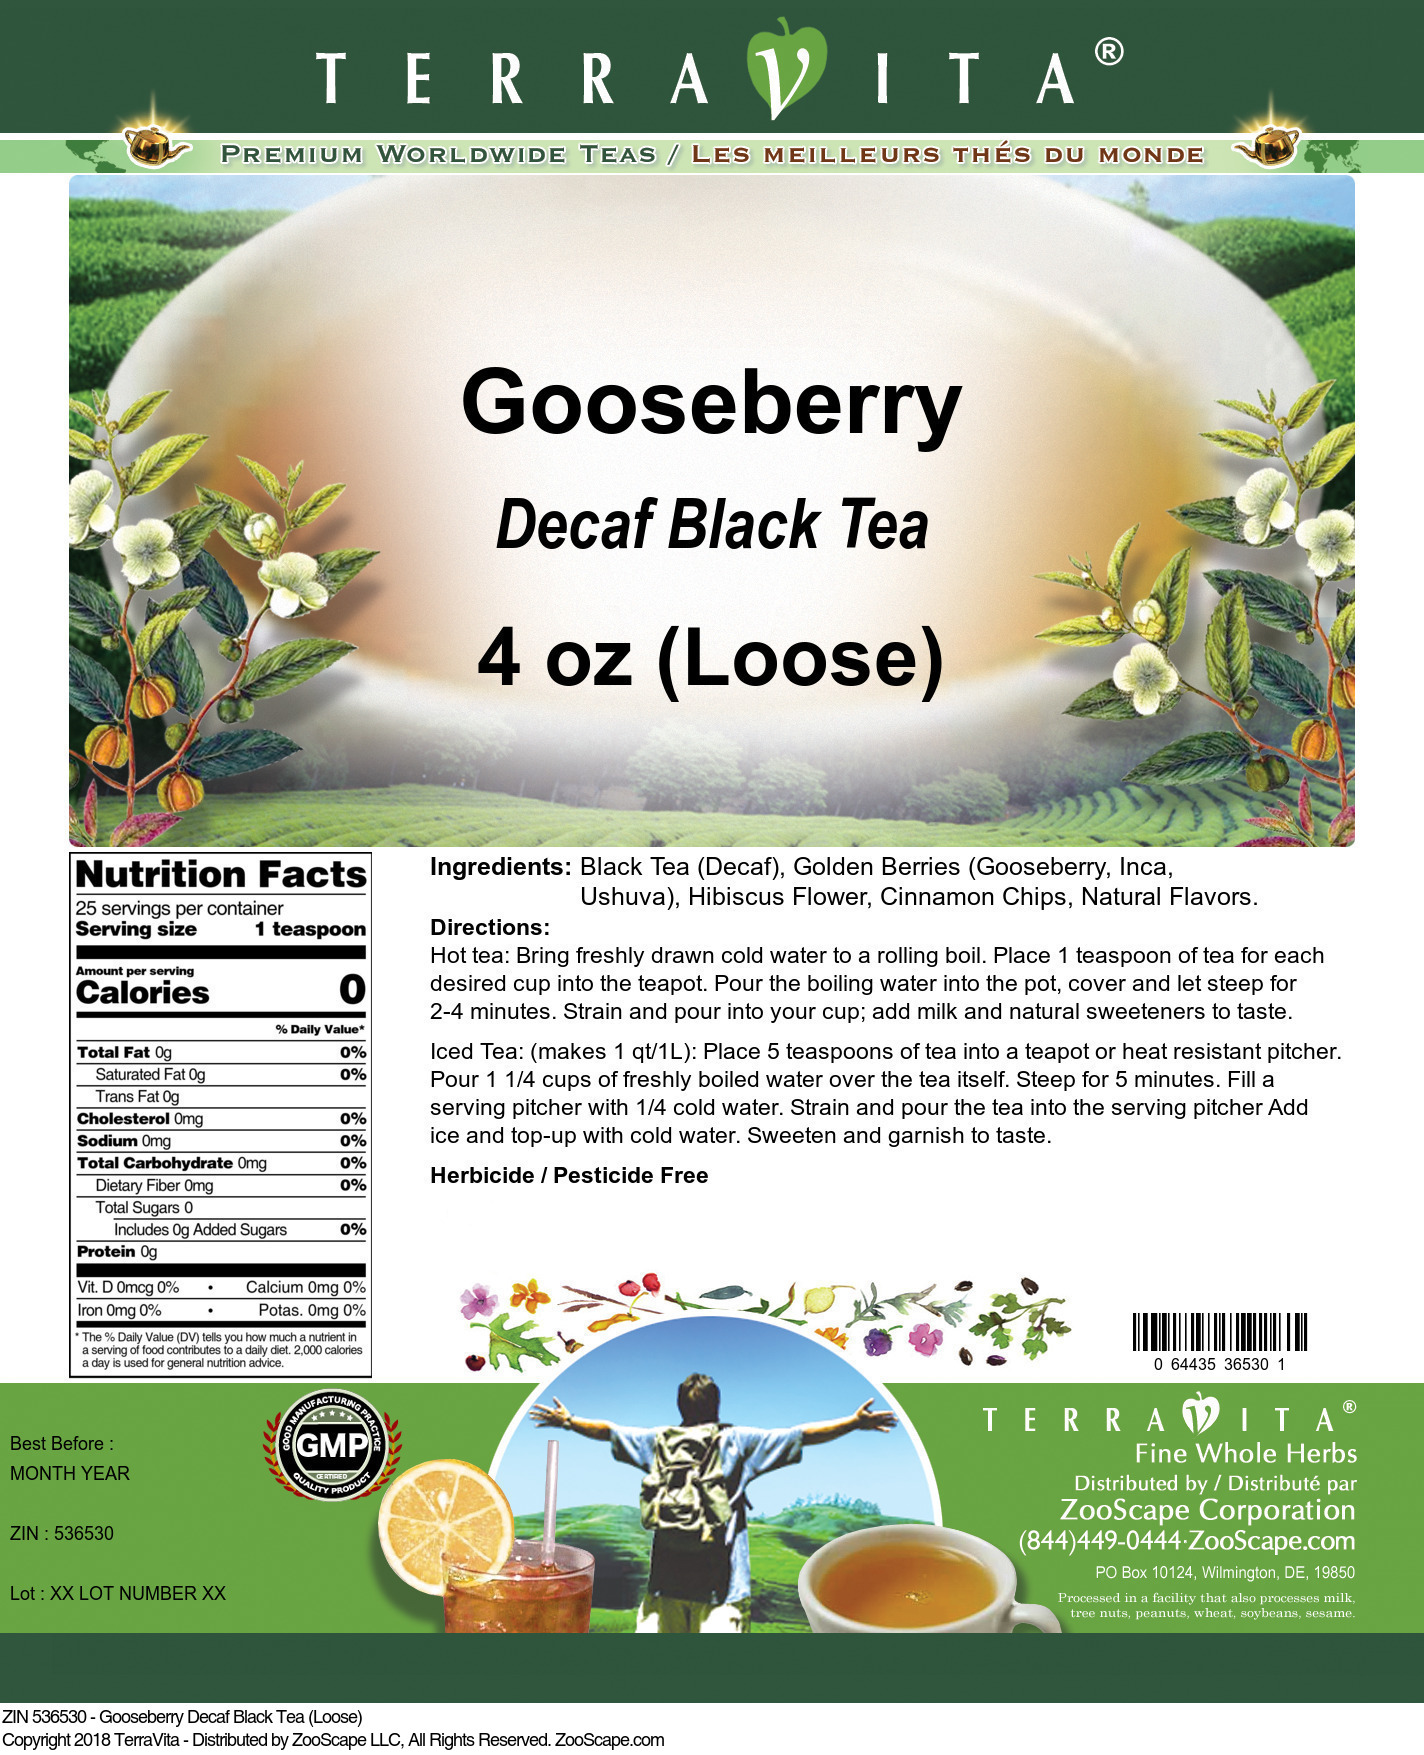 Gooseberry Decaf Black Tea (Loose) - Label